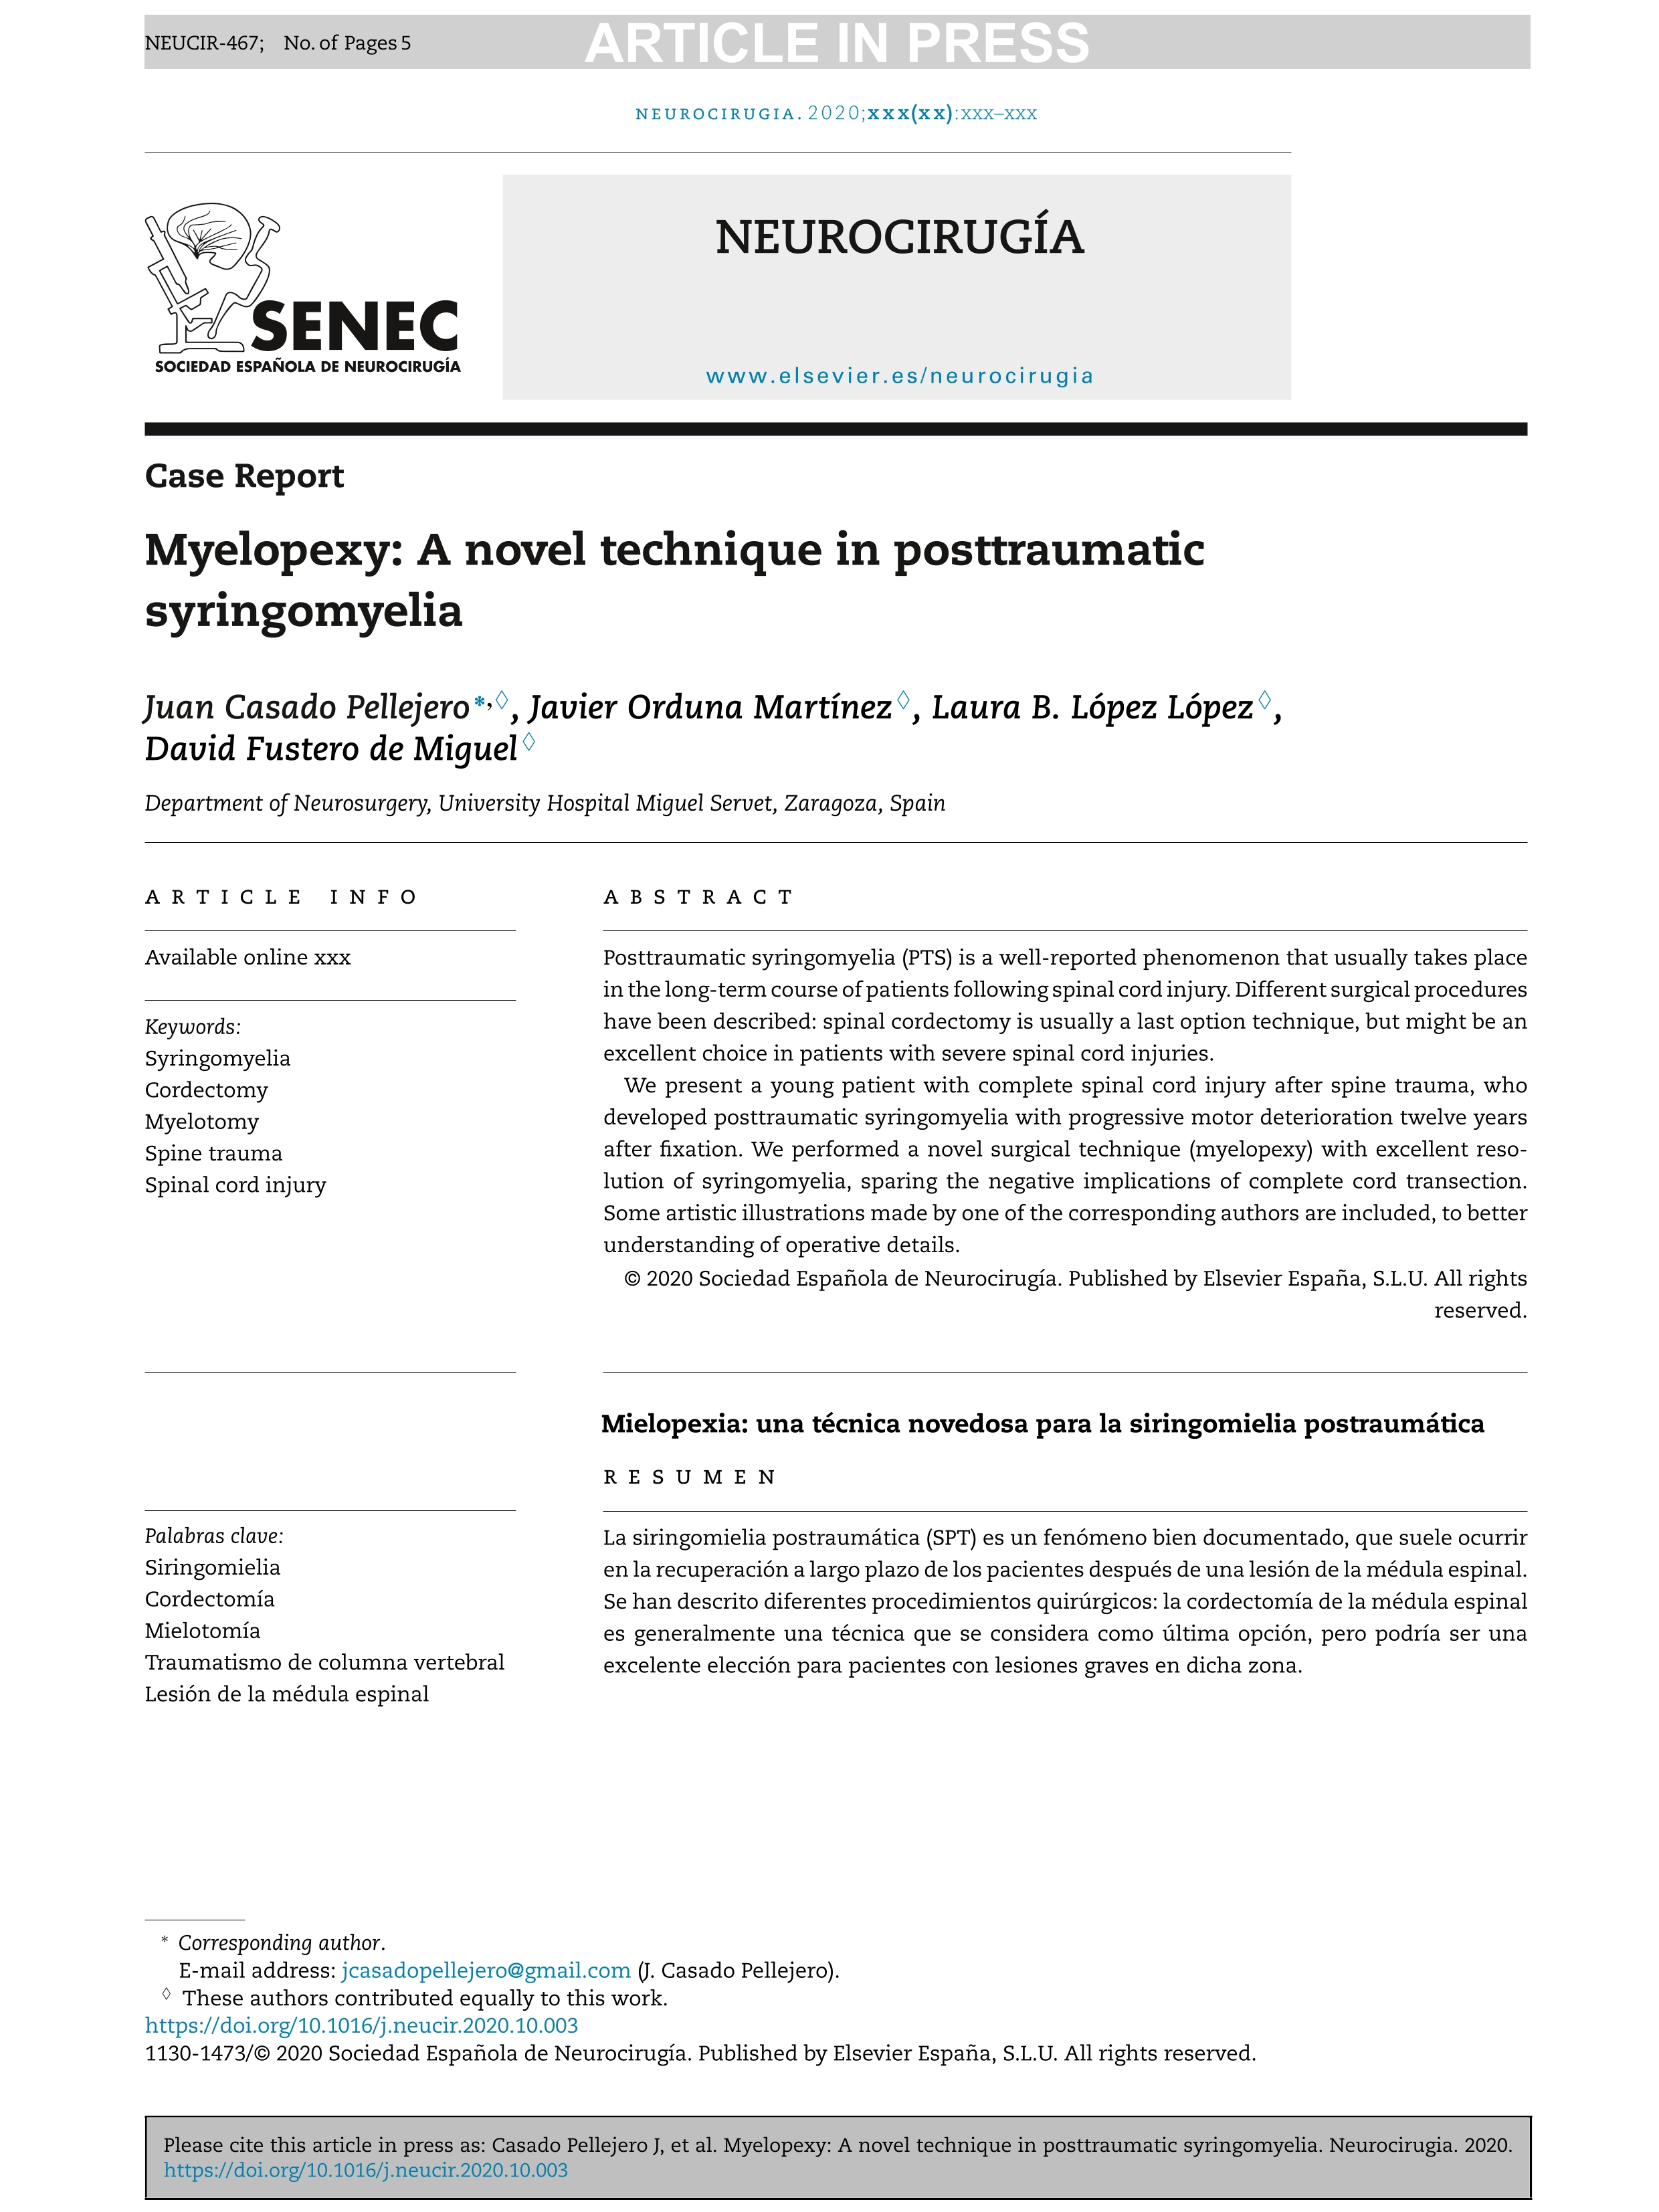 Myelopexy: A novel technique in posttraumatic syringomyelia